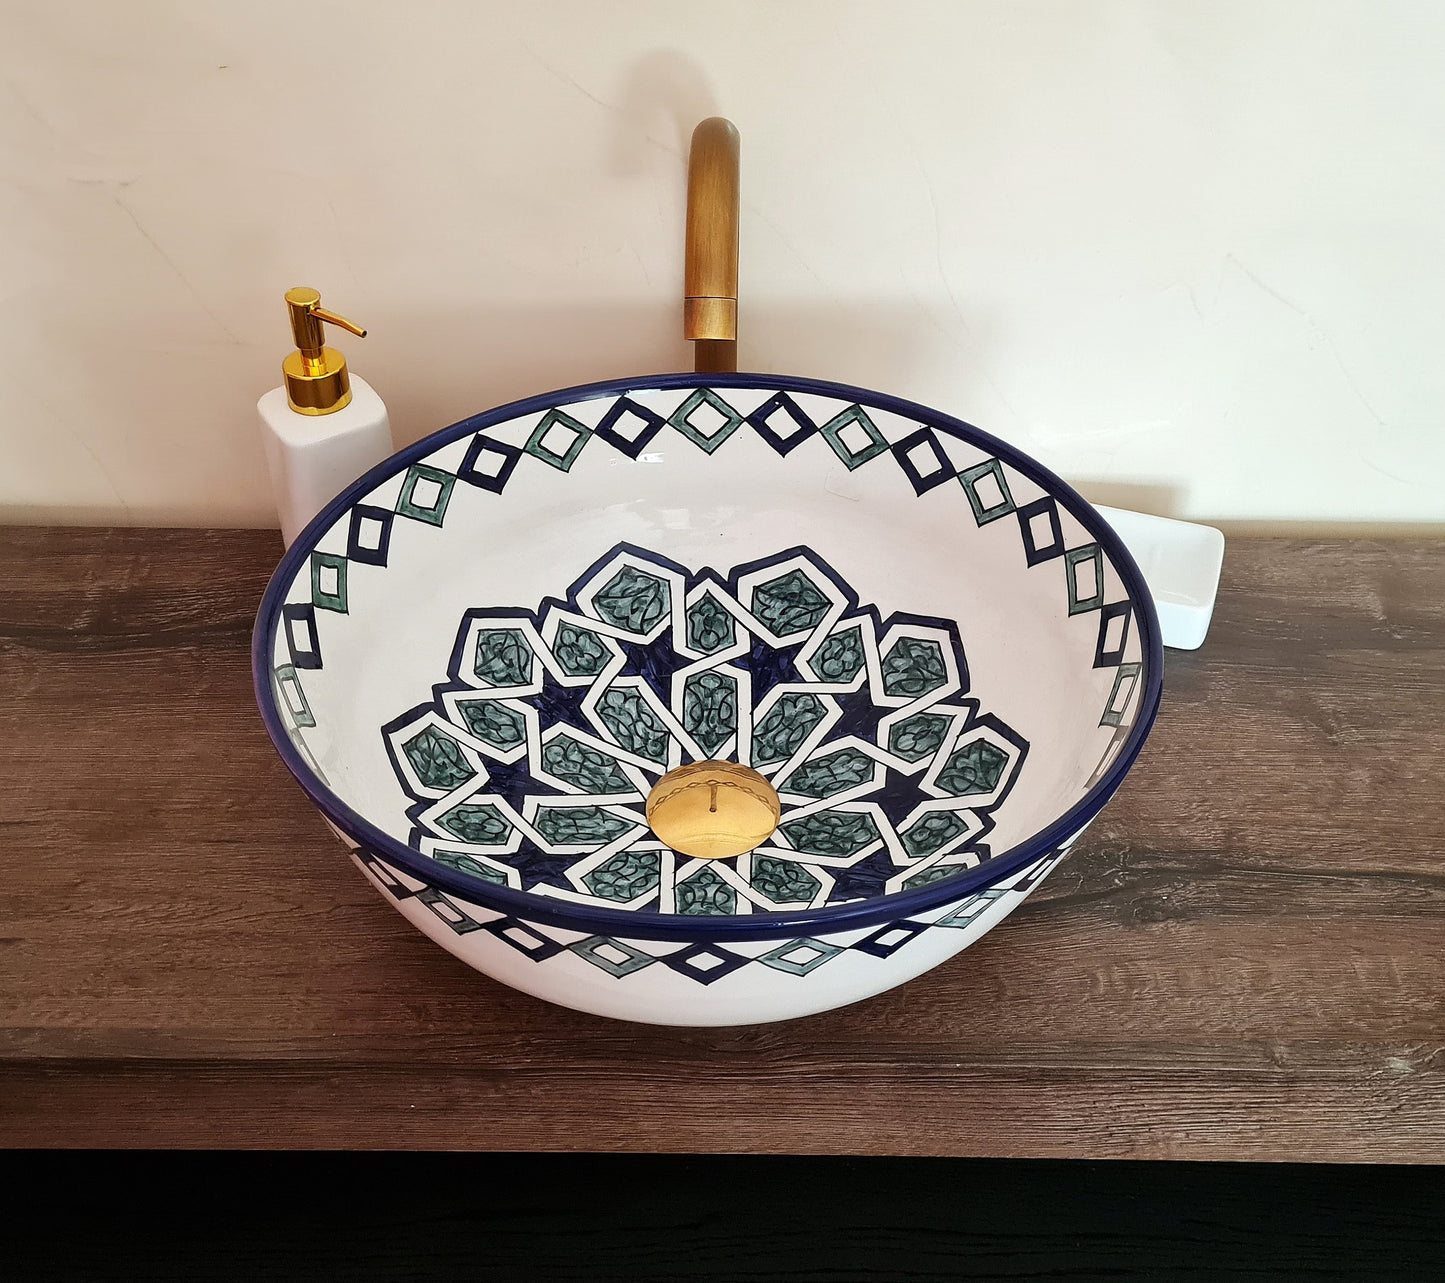 Moroccan bathroom sink | Moroccan ceramic zellige style bathroom sink #44